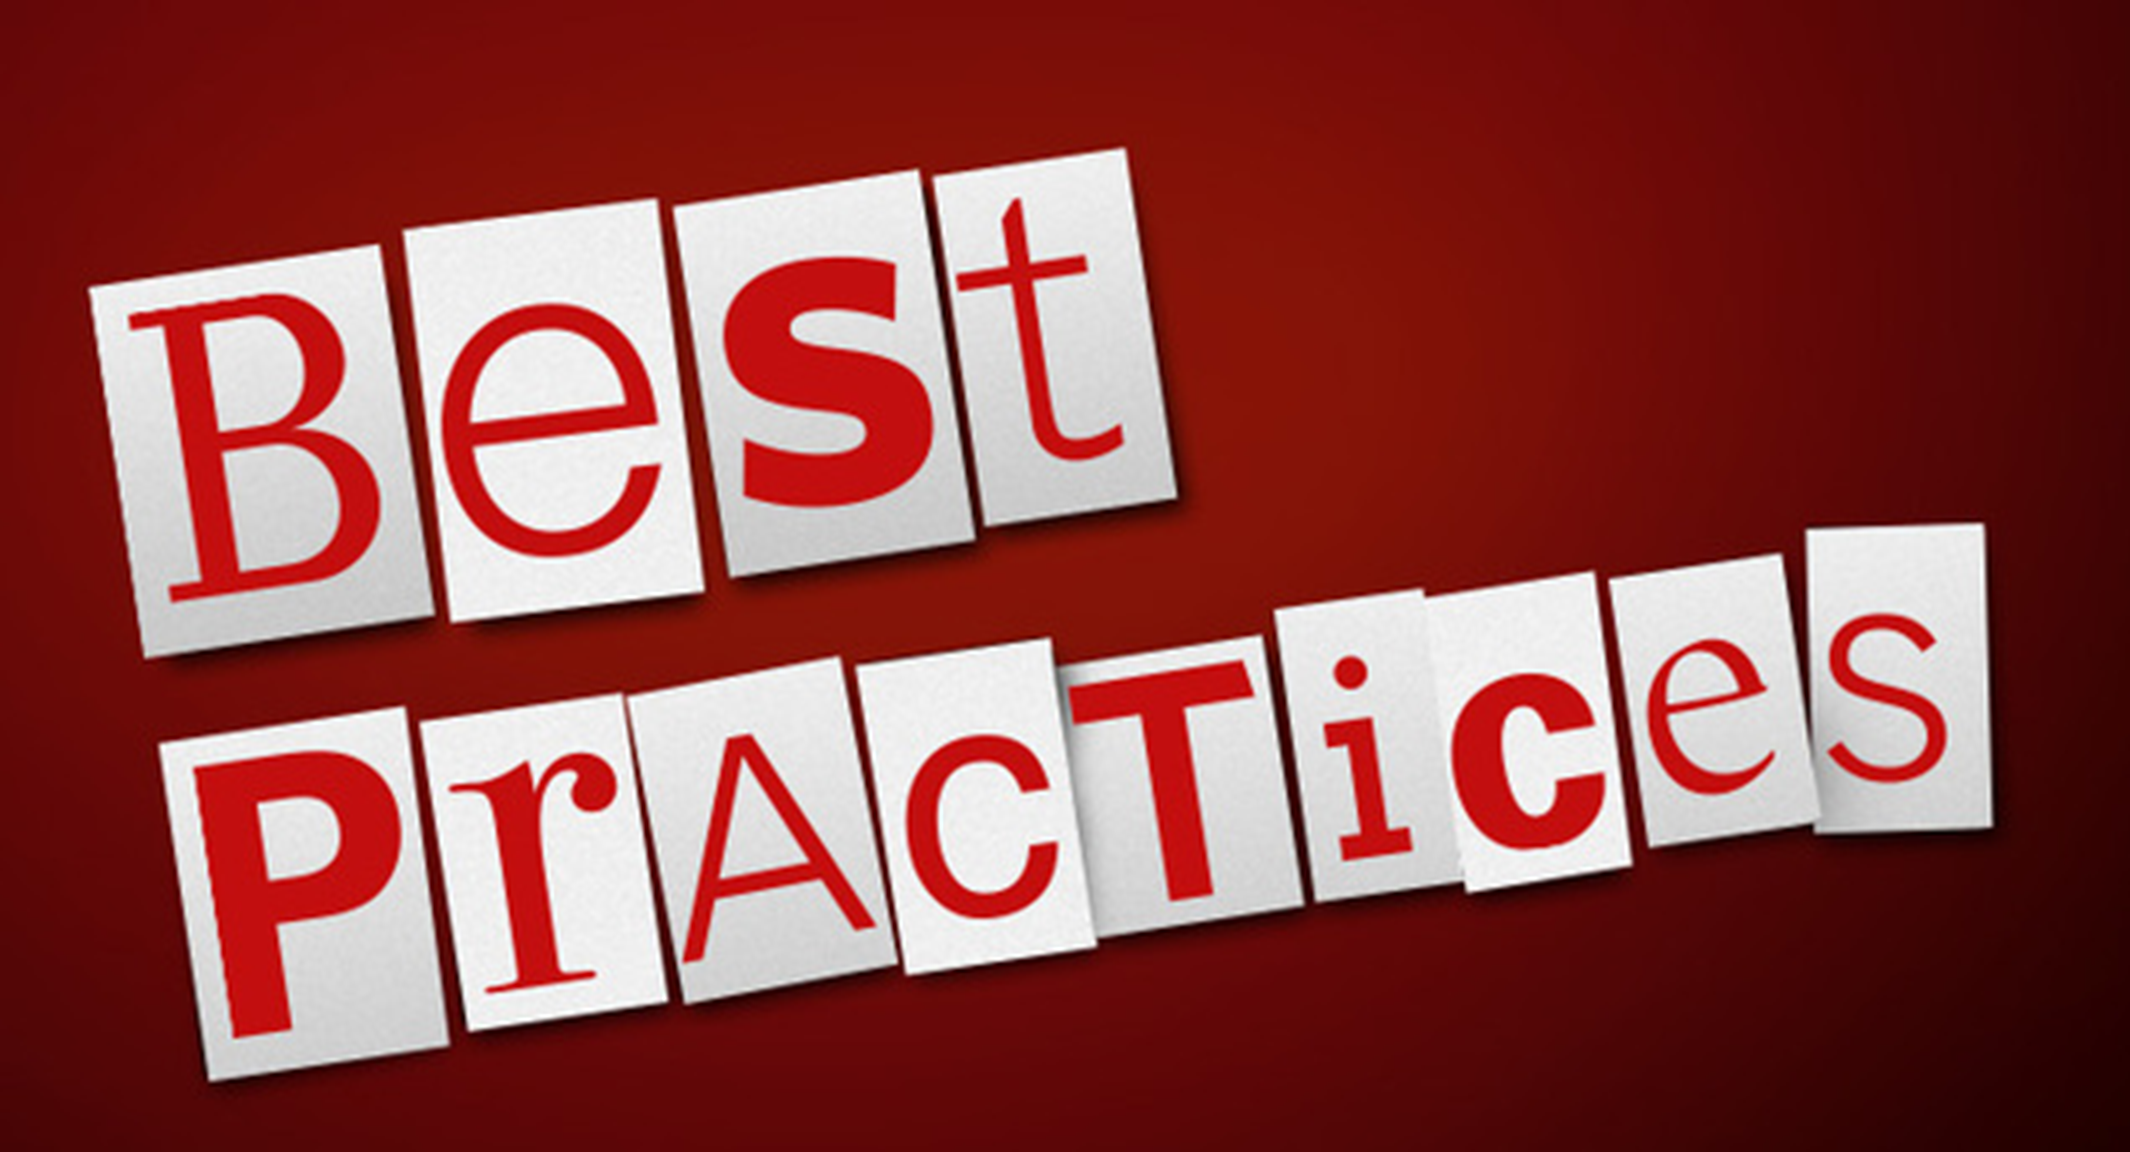 best practices.png